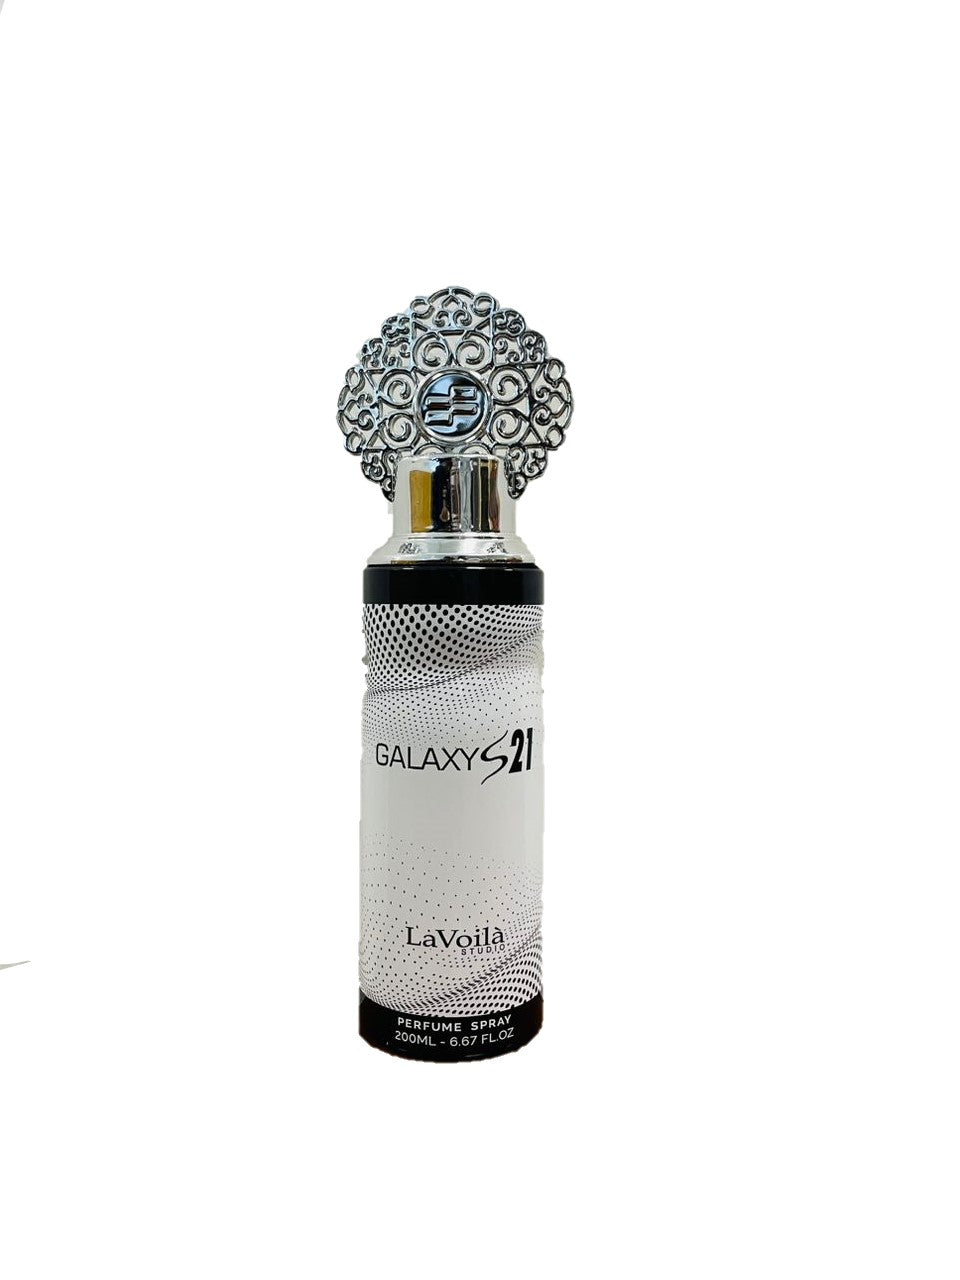 Galaxy S21 LaVoila Studio Perfume Spray